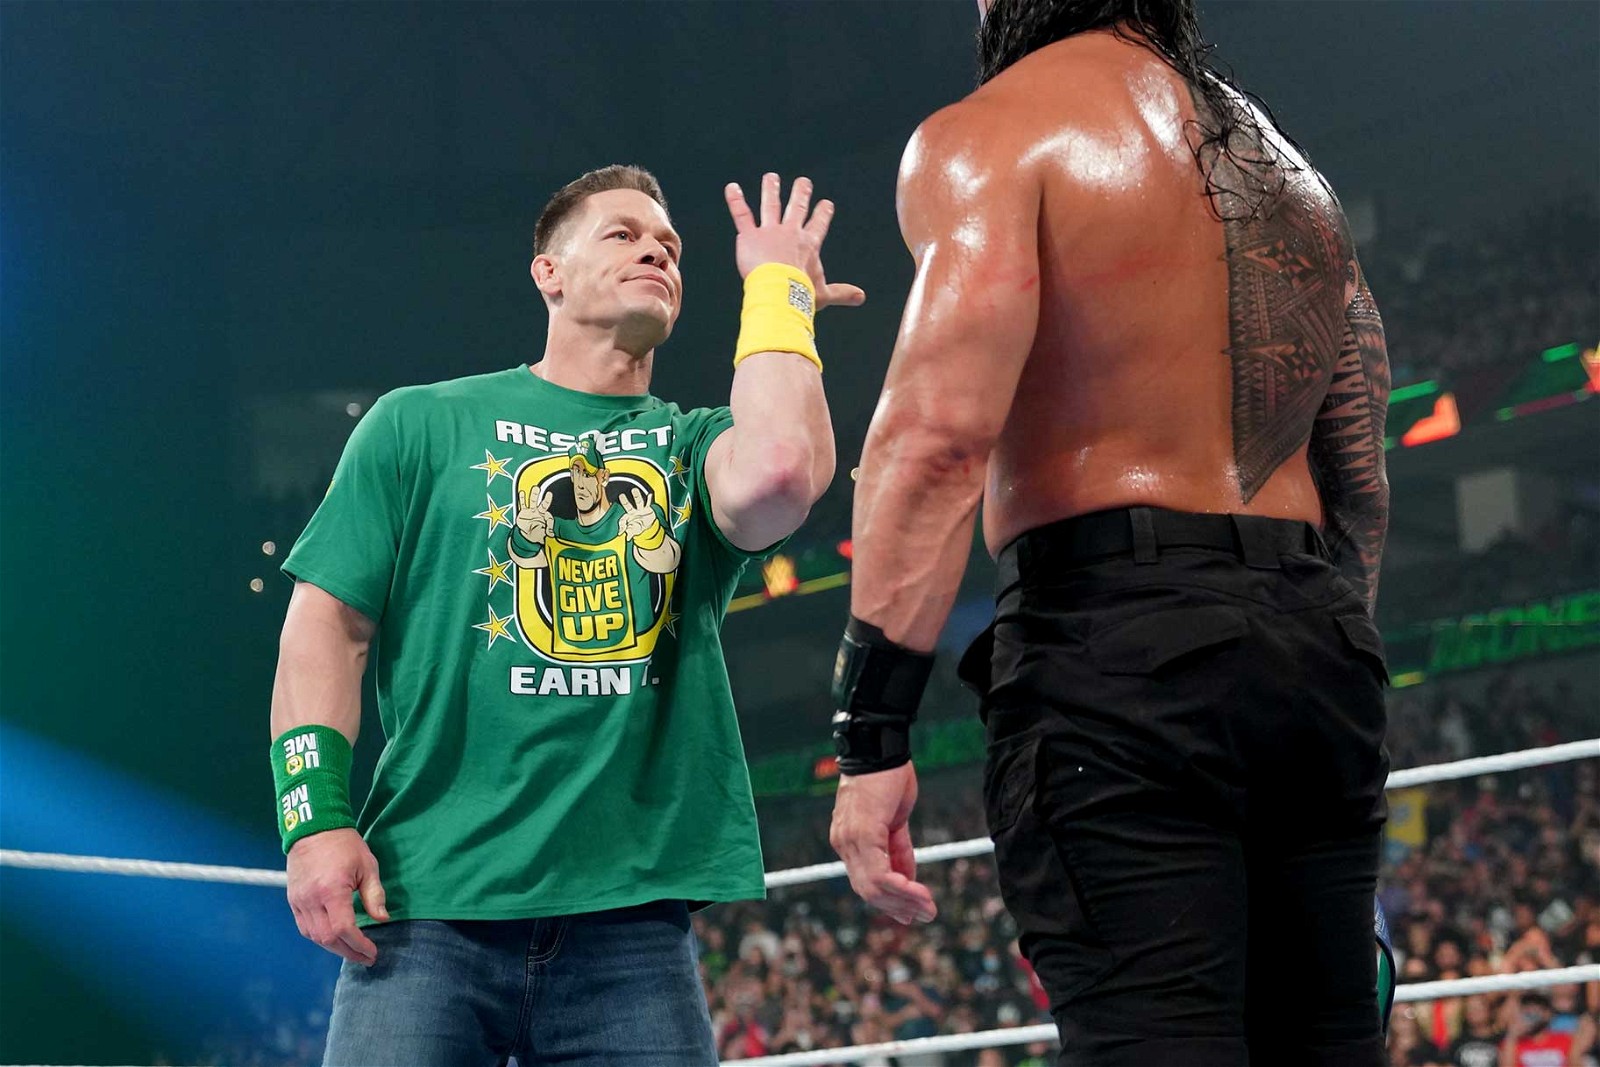 John Cena doing his iconic gesture.